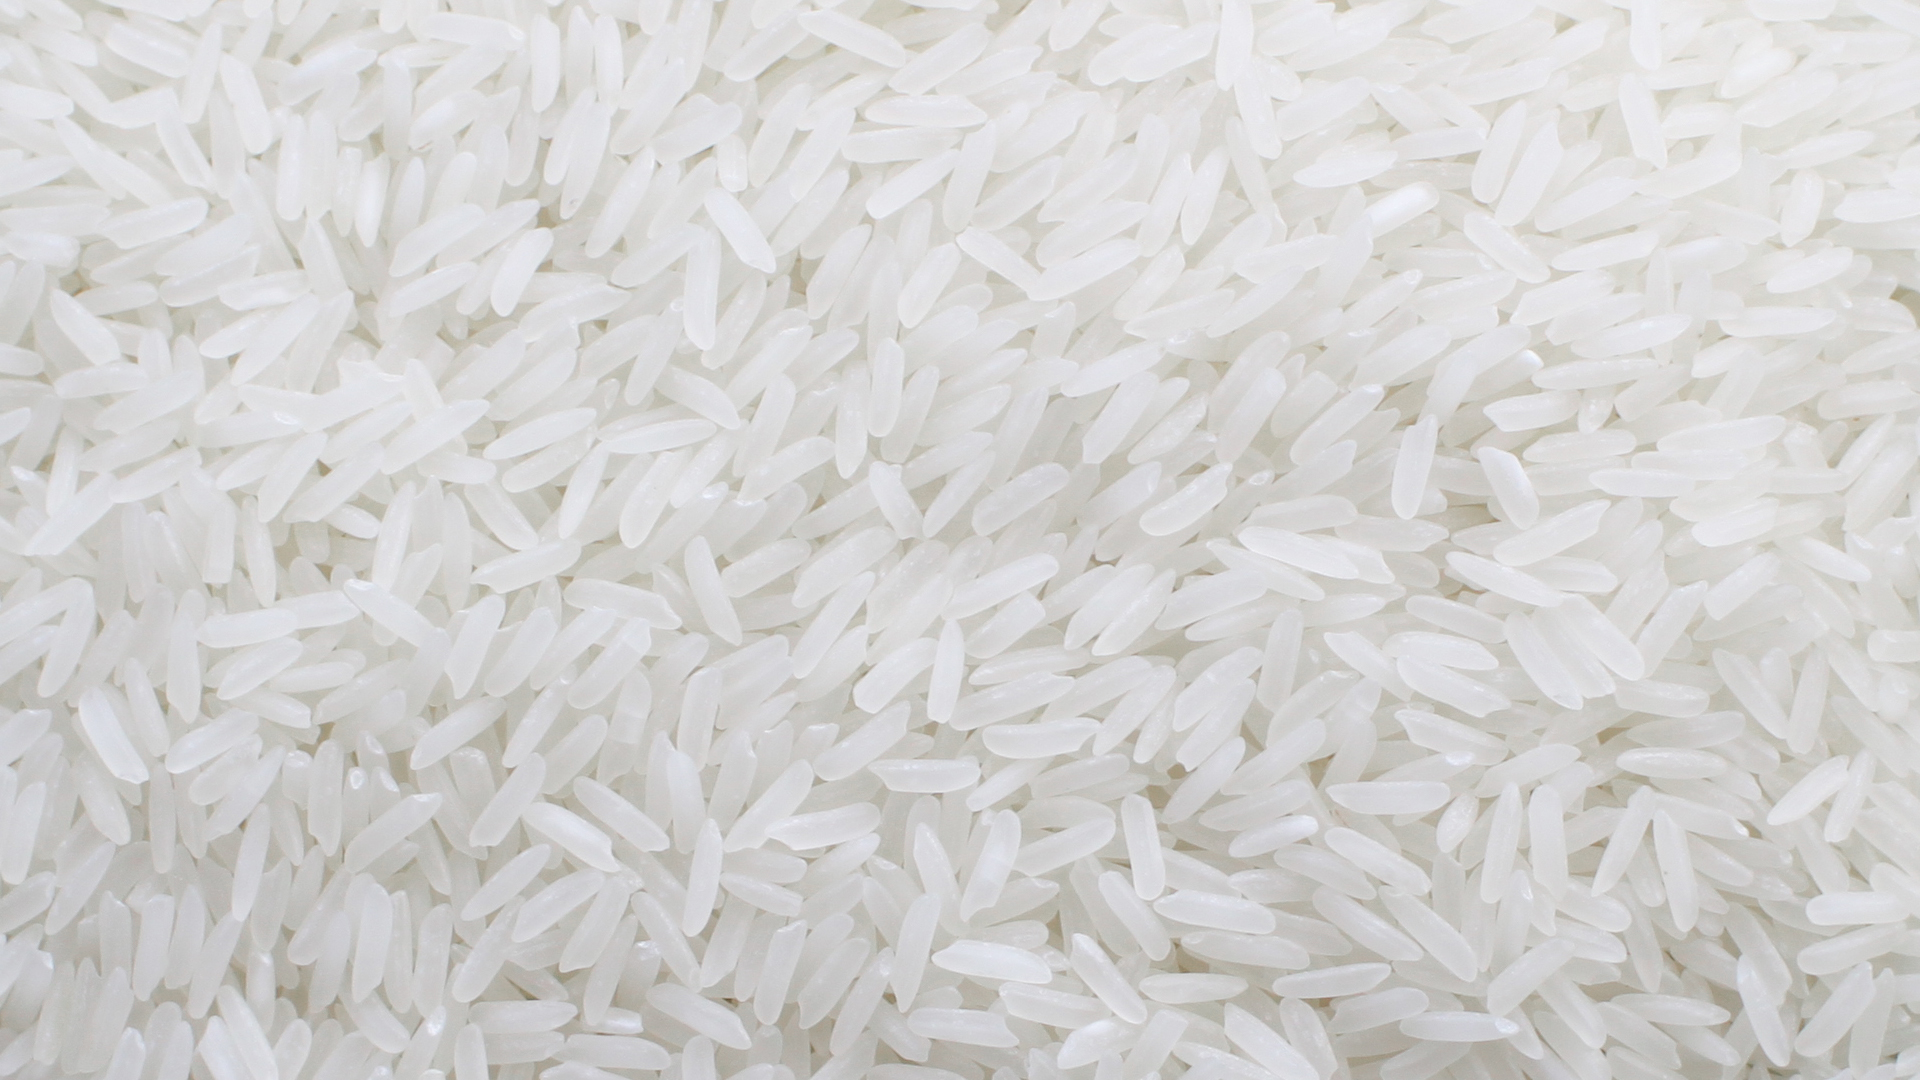 KDM rice